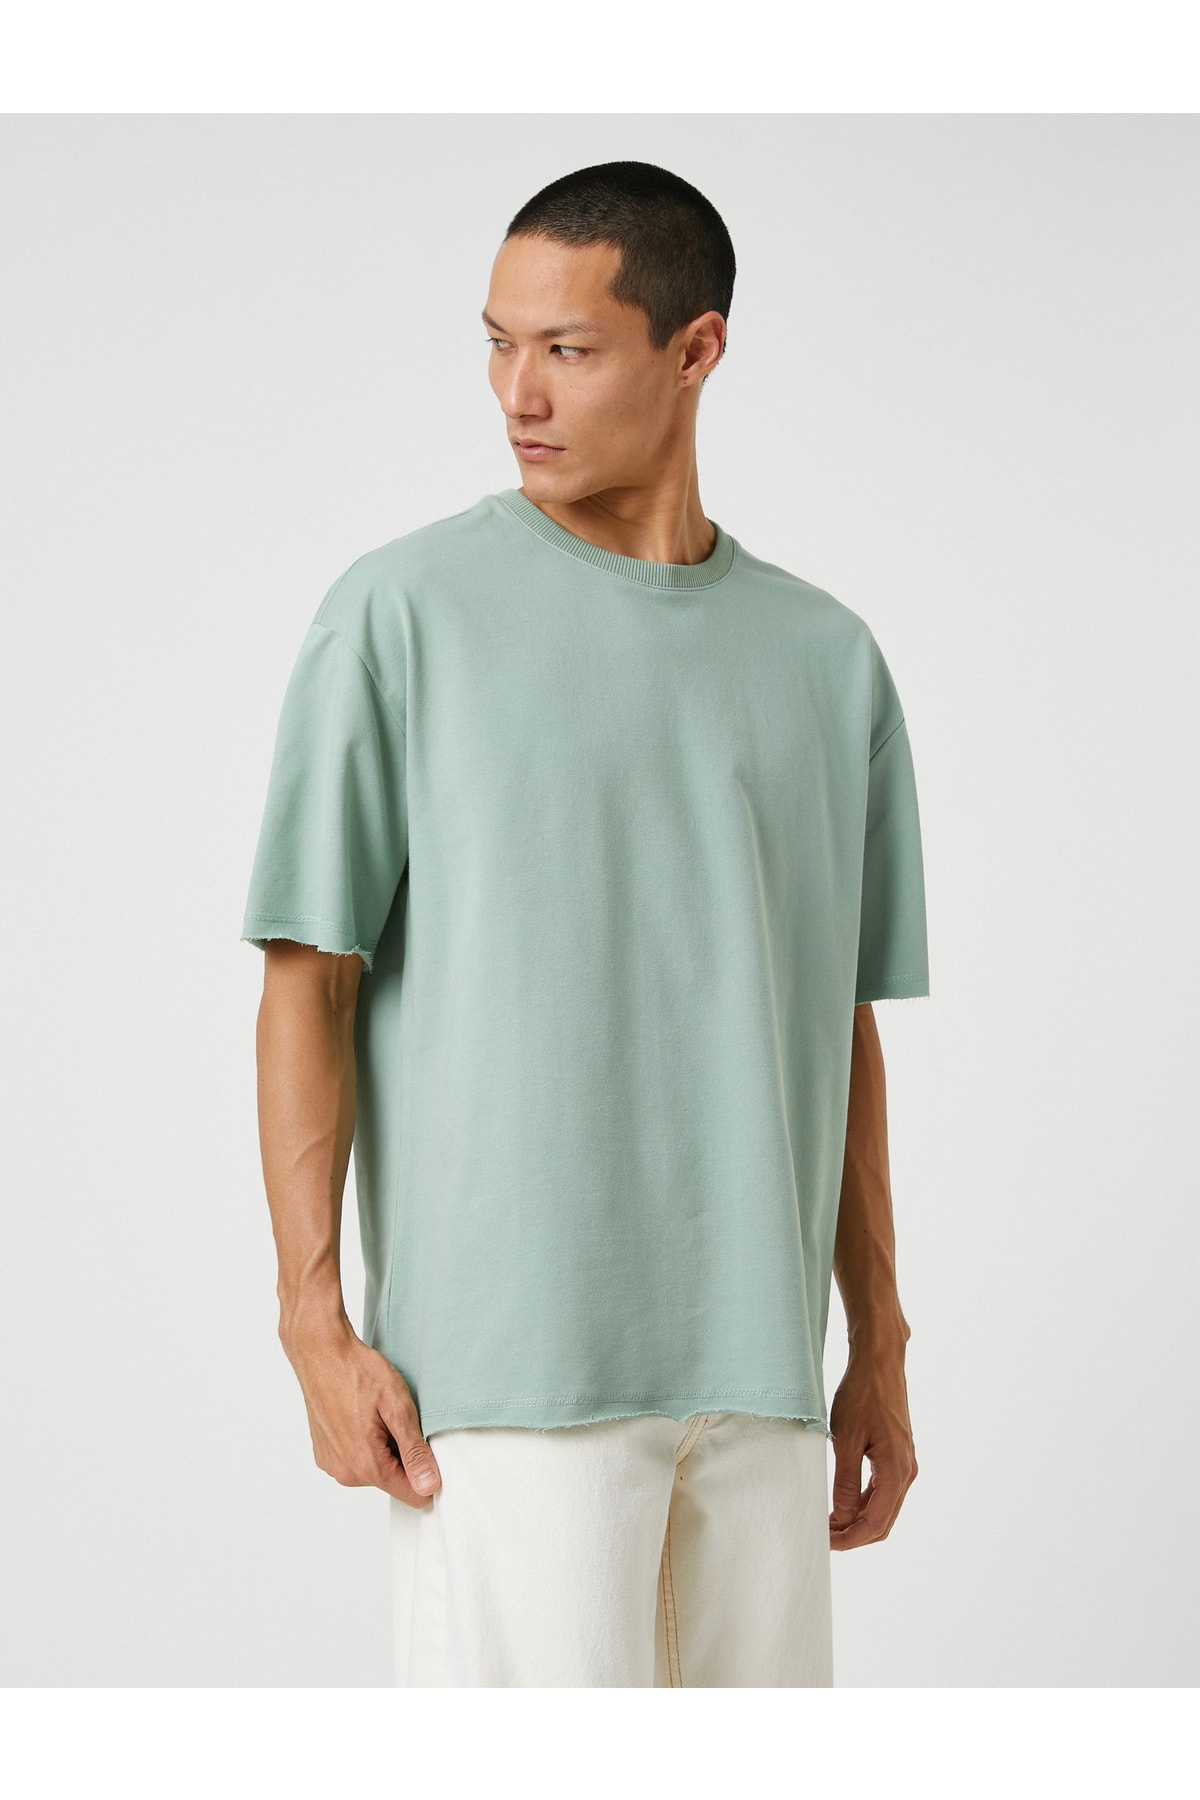 Koton Basic oversize tričko s krátkym rukávom s výstrihom posádky.